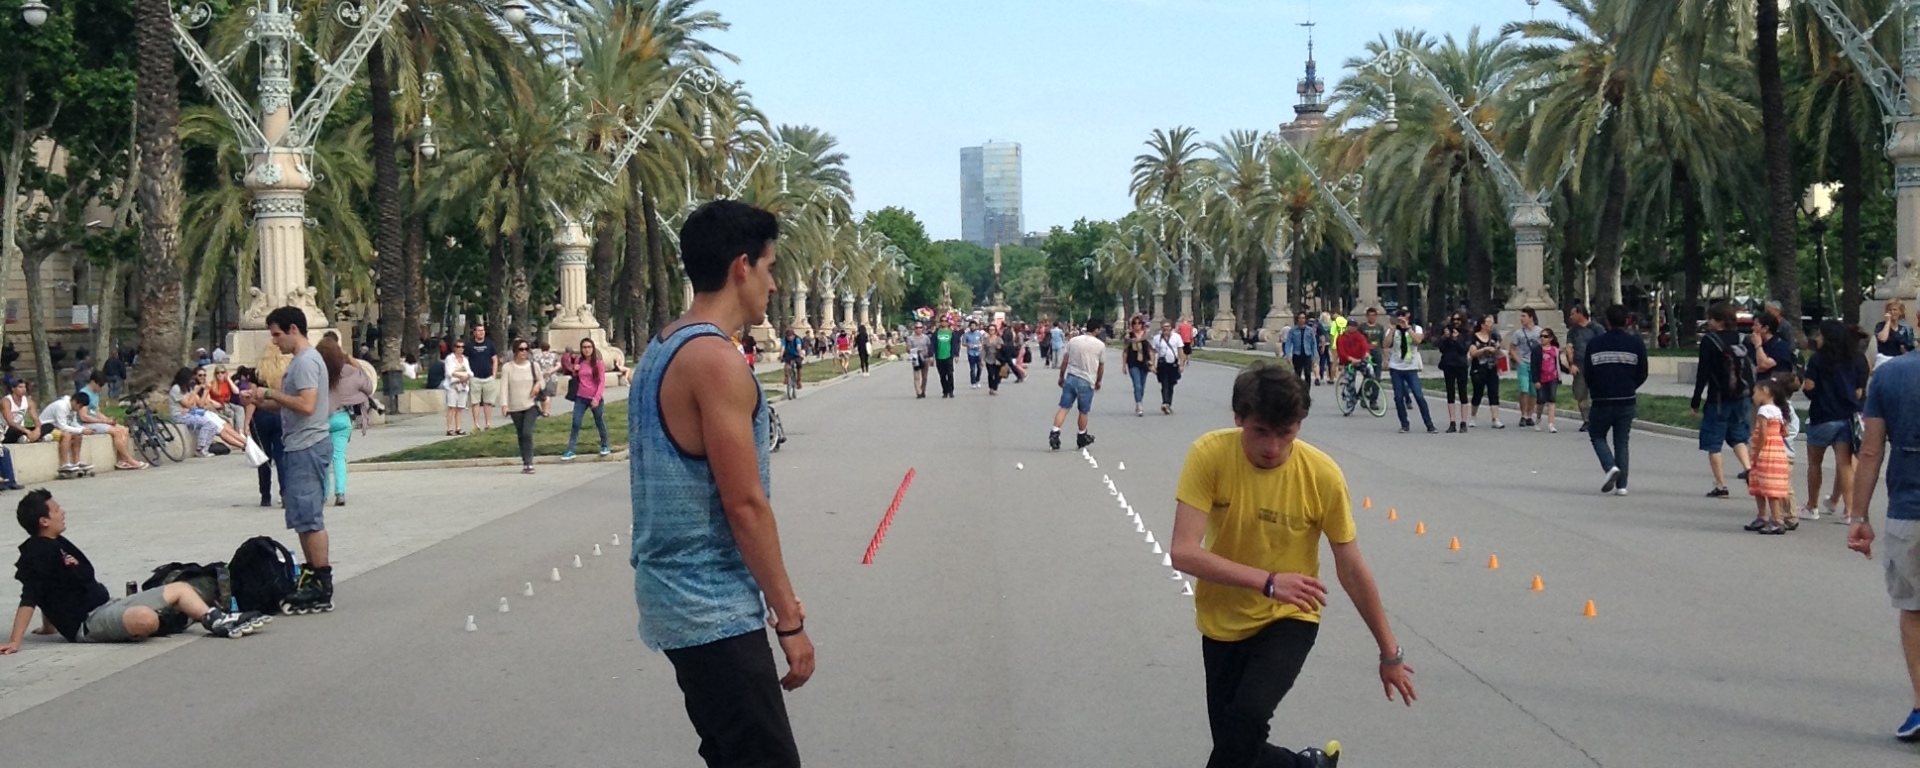 Barcelona parc de la ciutadella